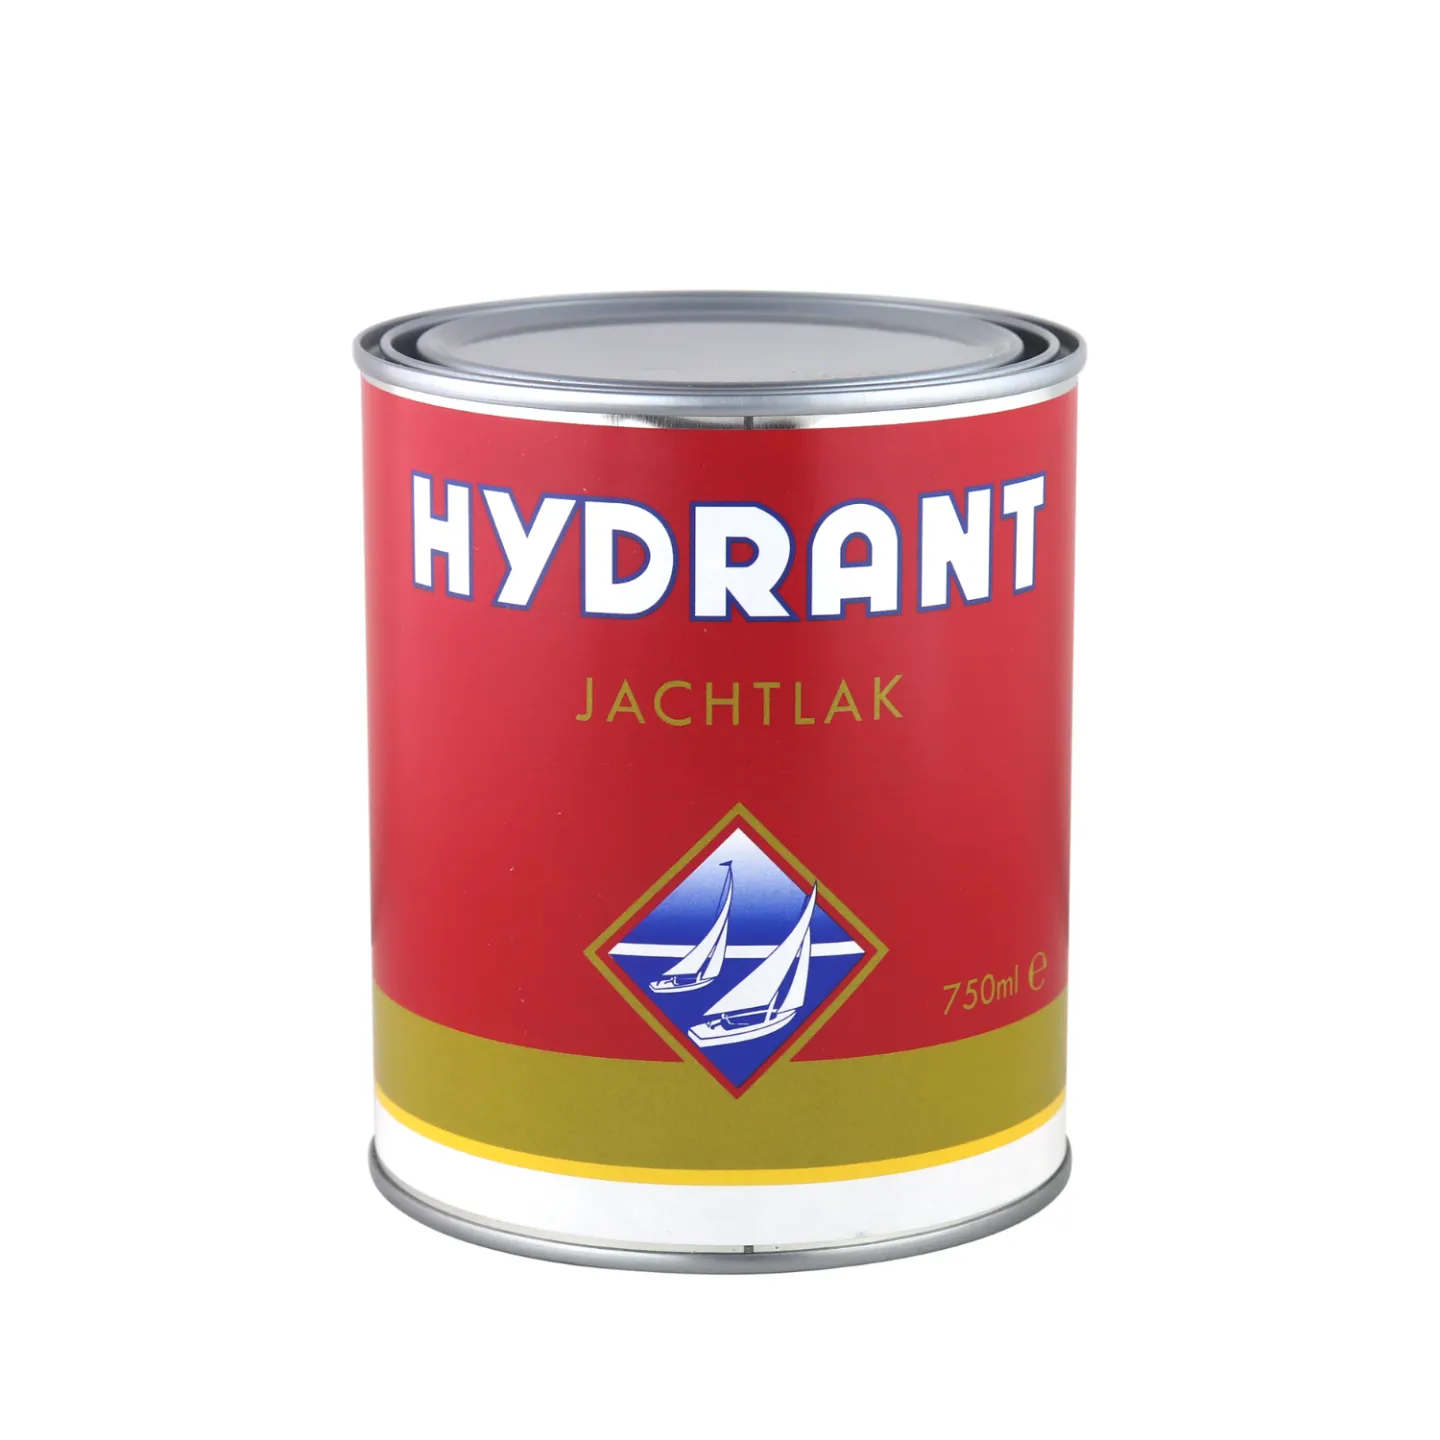 Hydrant jachtlak blanke lak (1).